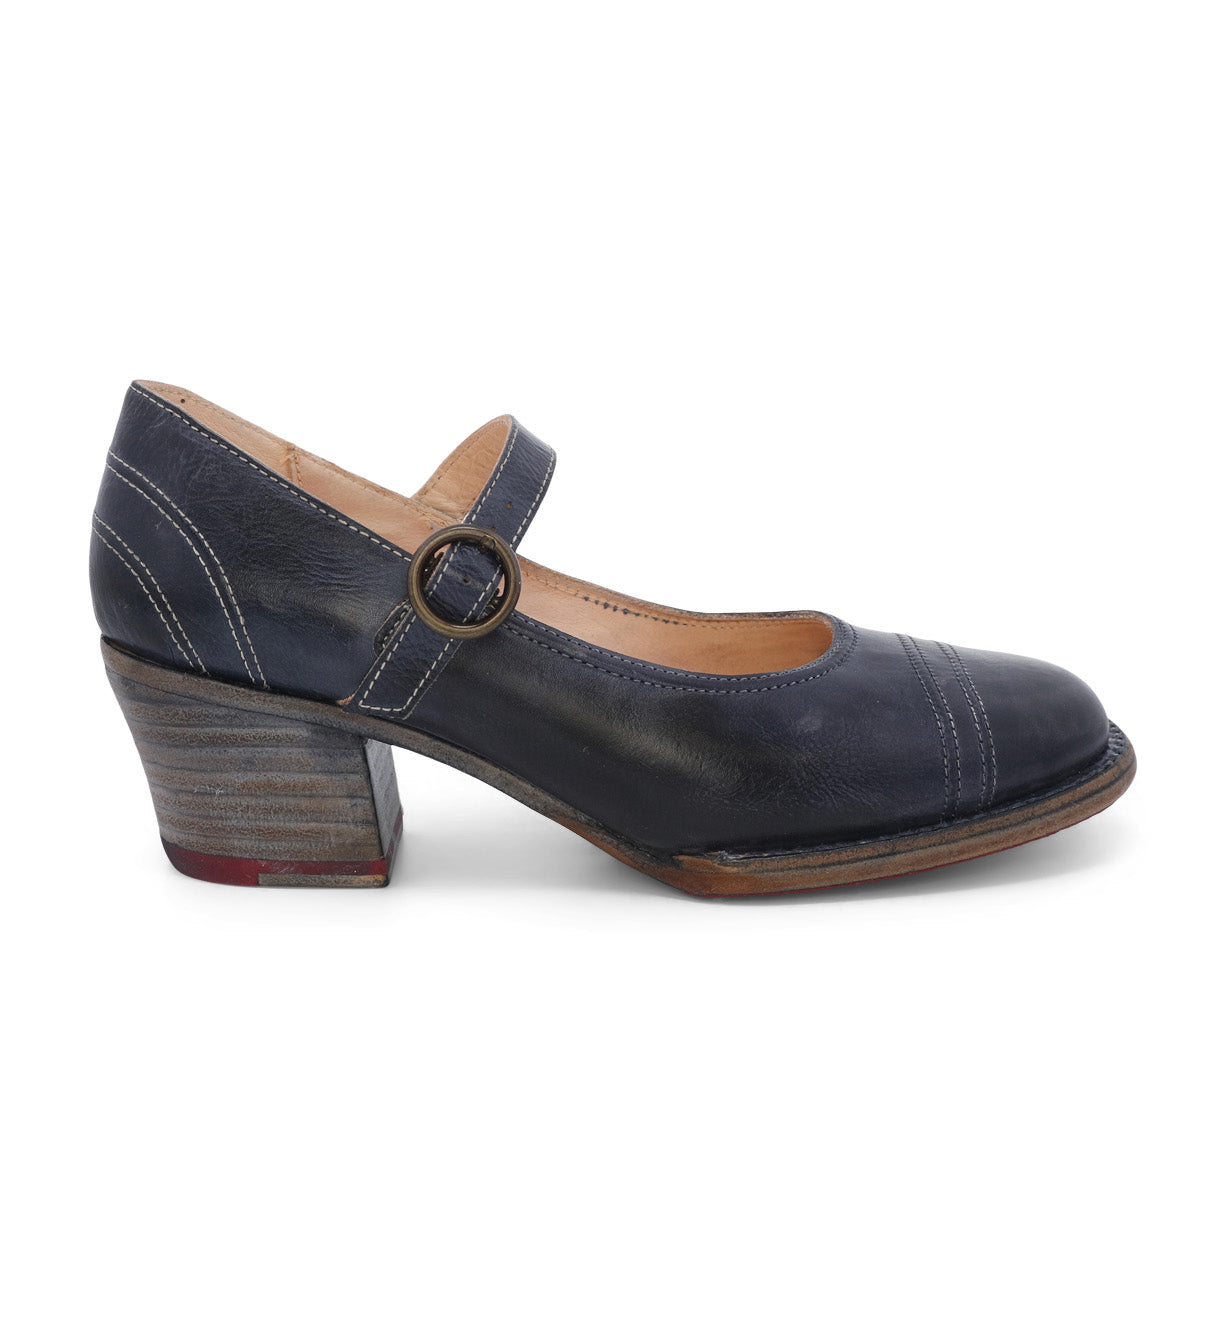 A women's blue mary jane shoe with a wooden heel in the Oak Tree Farms Twigley style.